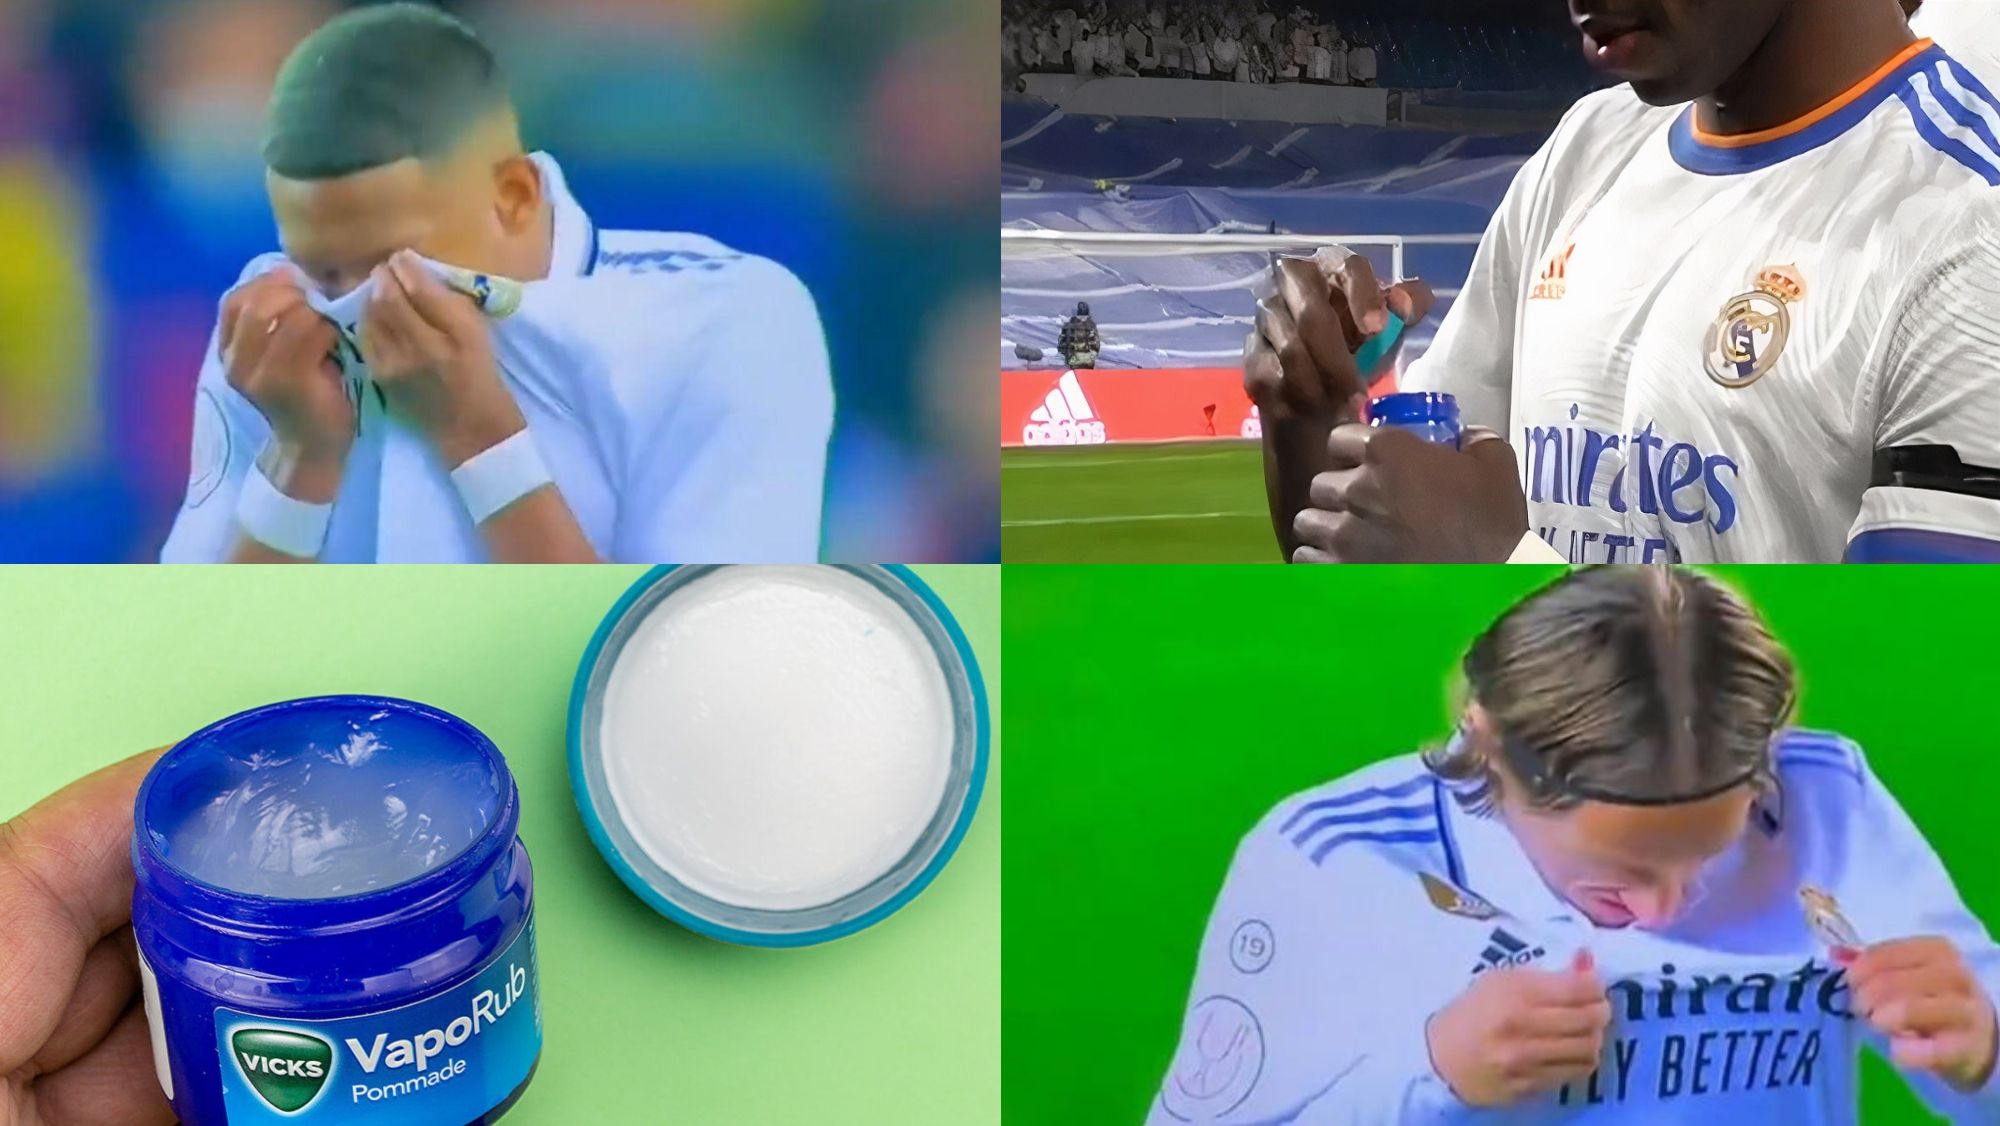 Jugadores del Madrid inhalando Vicks Vaporub